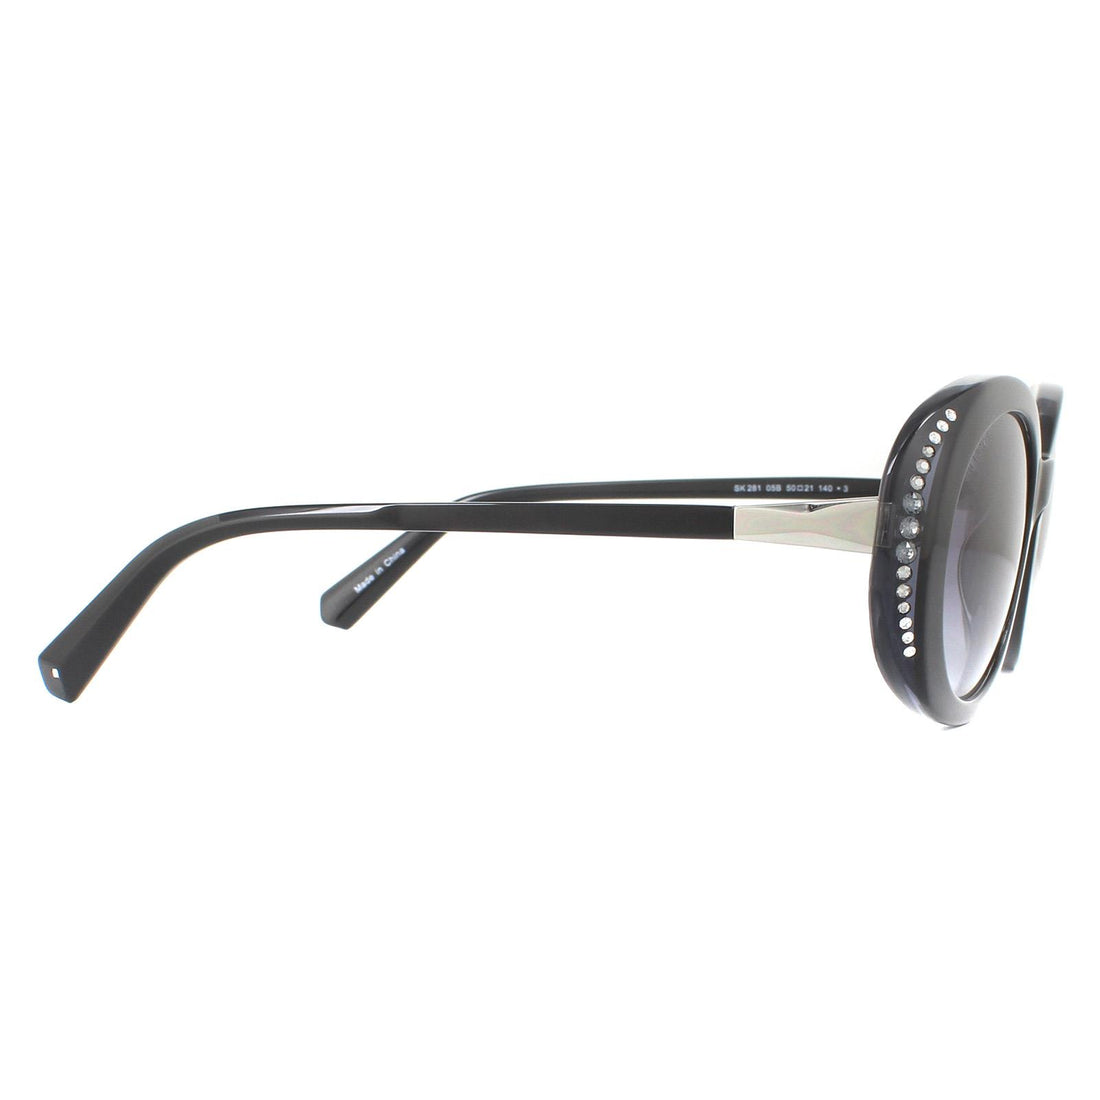 Swarovski SK0281/S Sunglasses